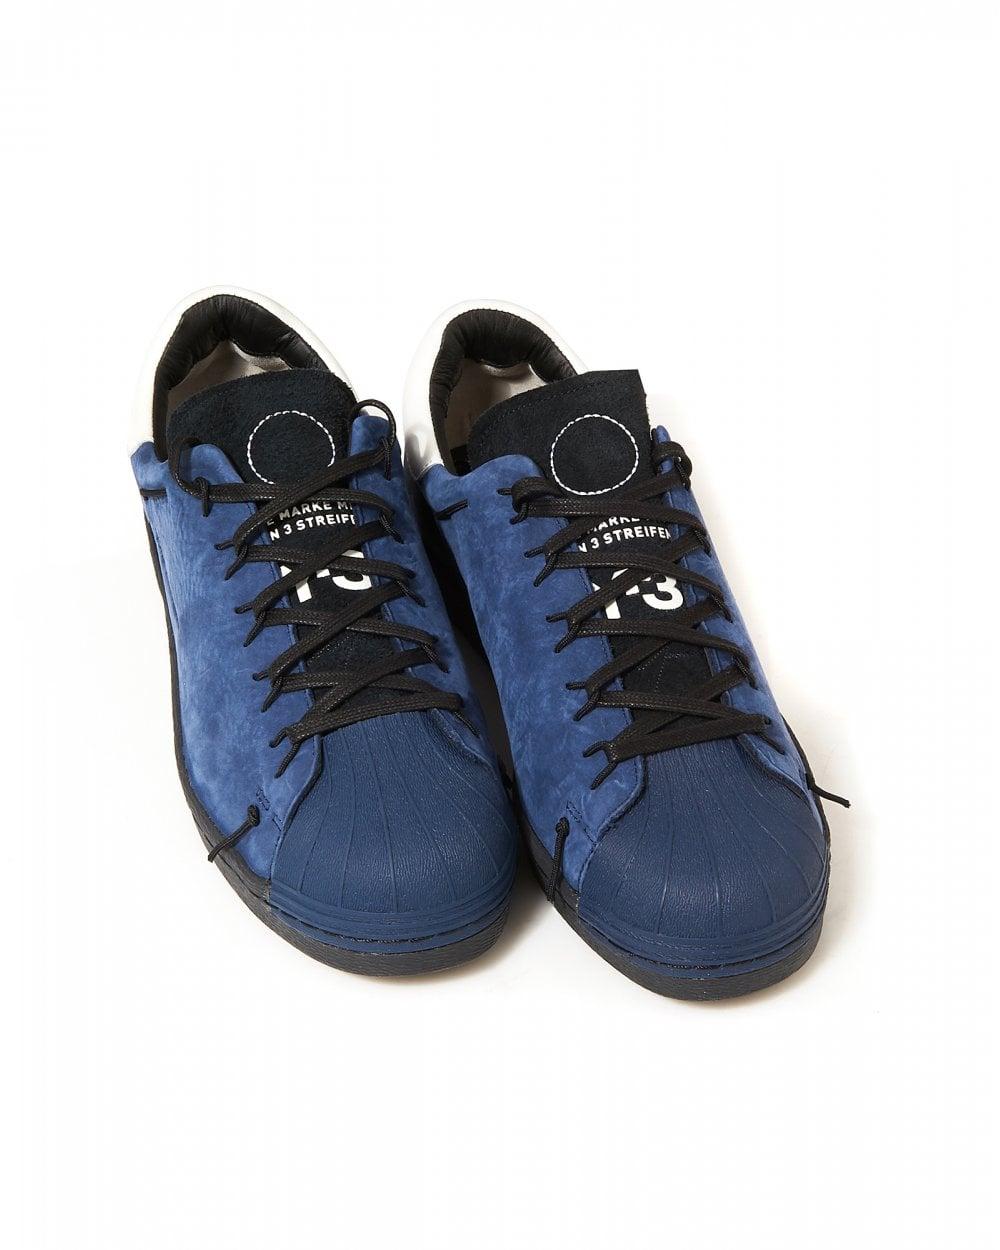 Indigo Blue and Black Logo - Y-3 Mens Super Knot Trainers, Night Indigo Blue Suede Sneakers